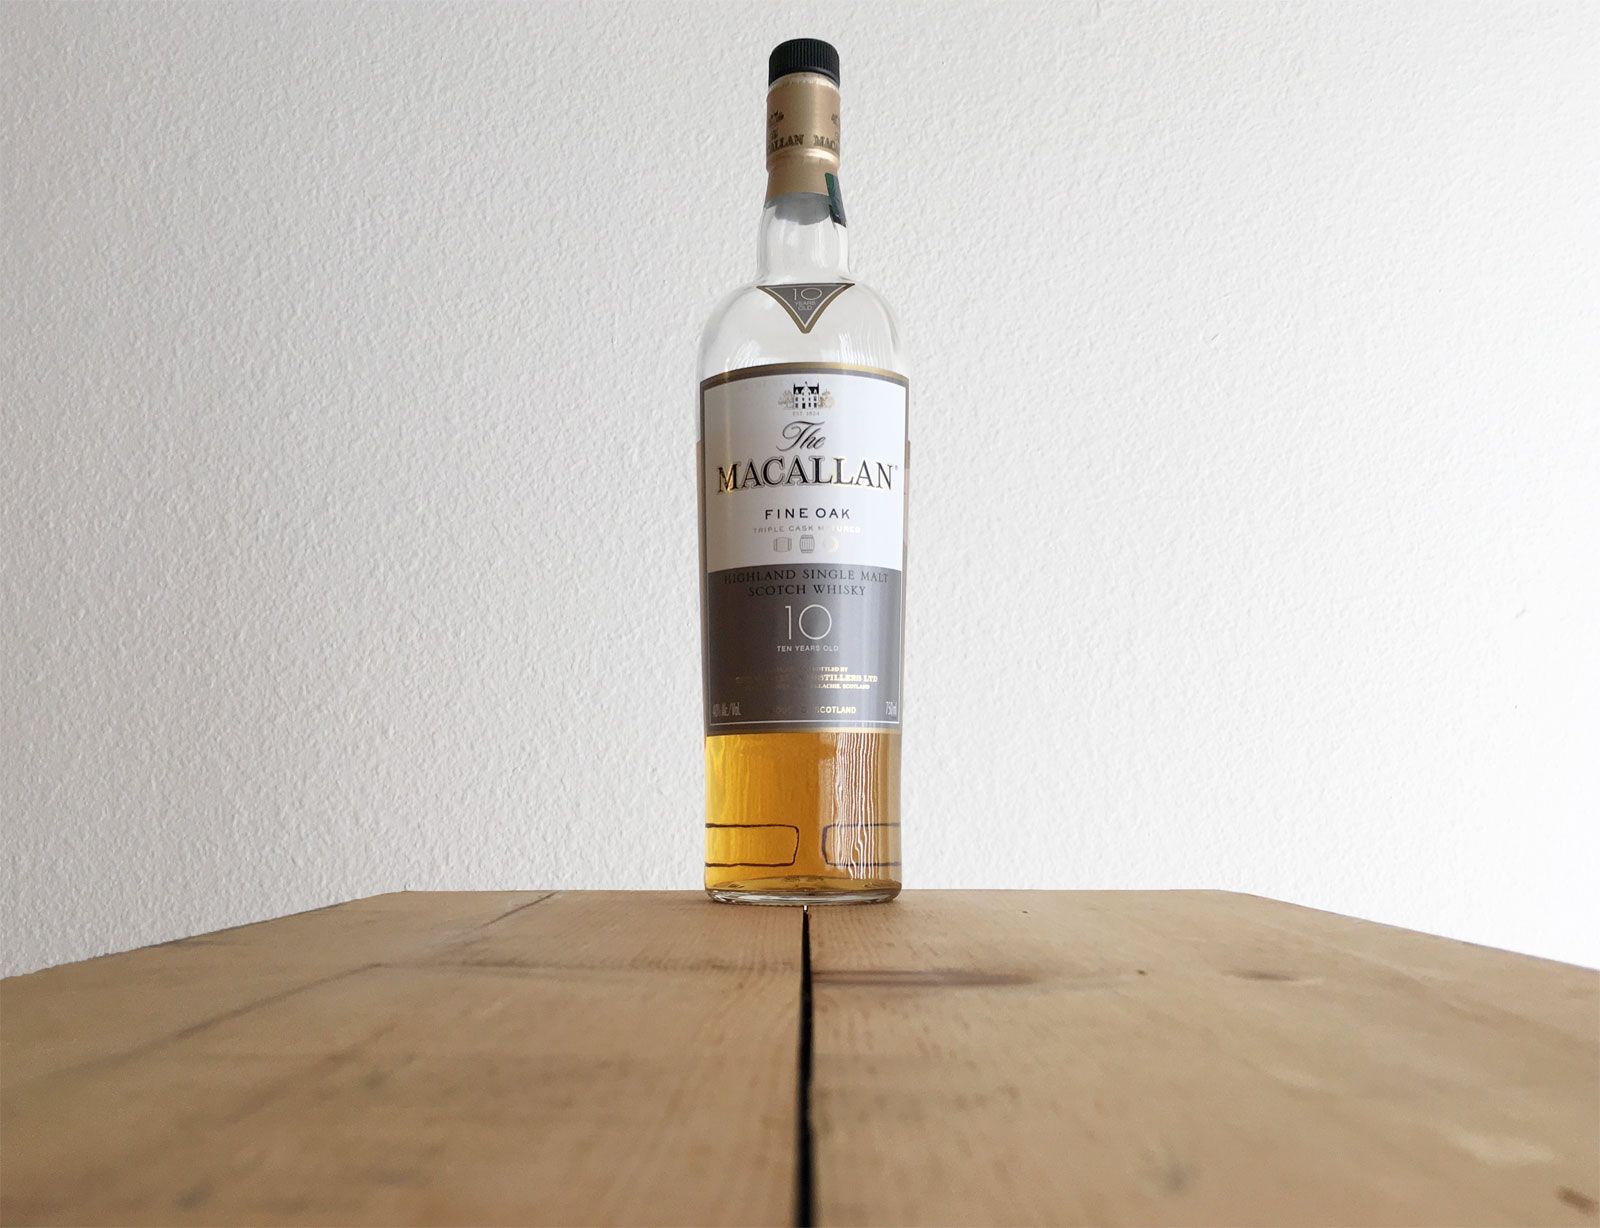 The Macallan Fine Oak 10 Year Old Highland Single Malt Scotch Whisky